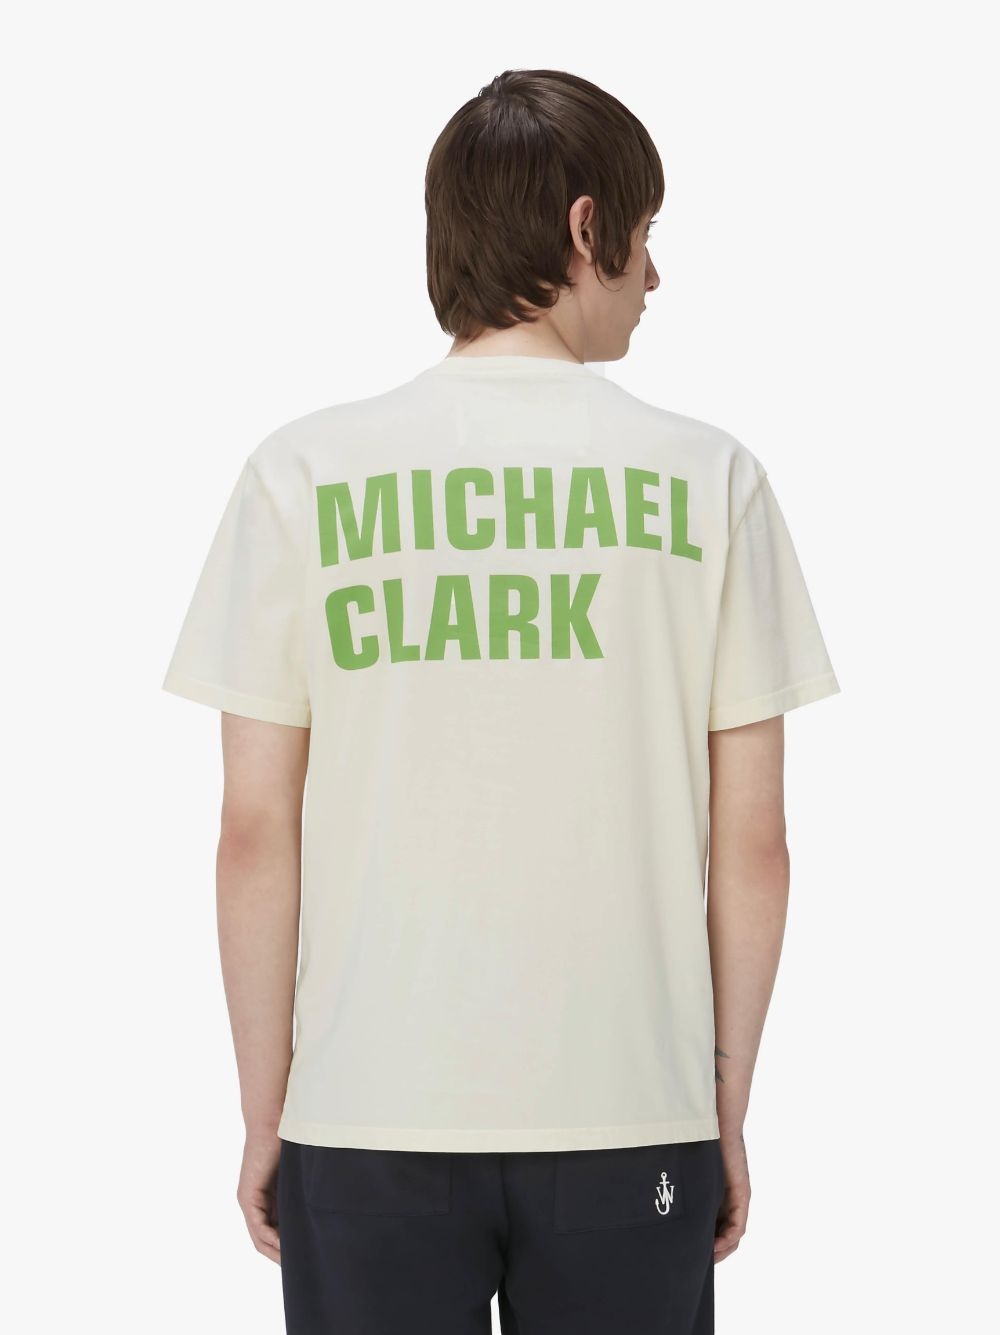 MICHAEL CLARK PRINTED T-SHIRT - 3